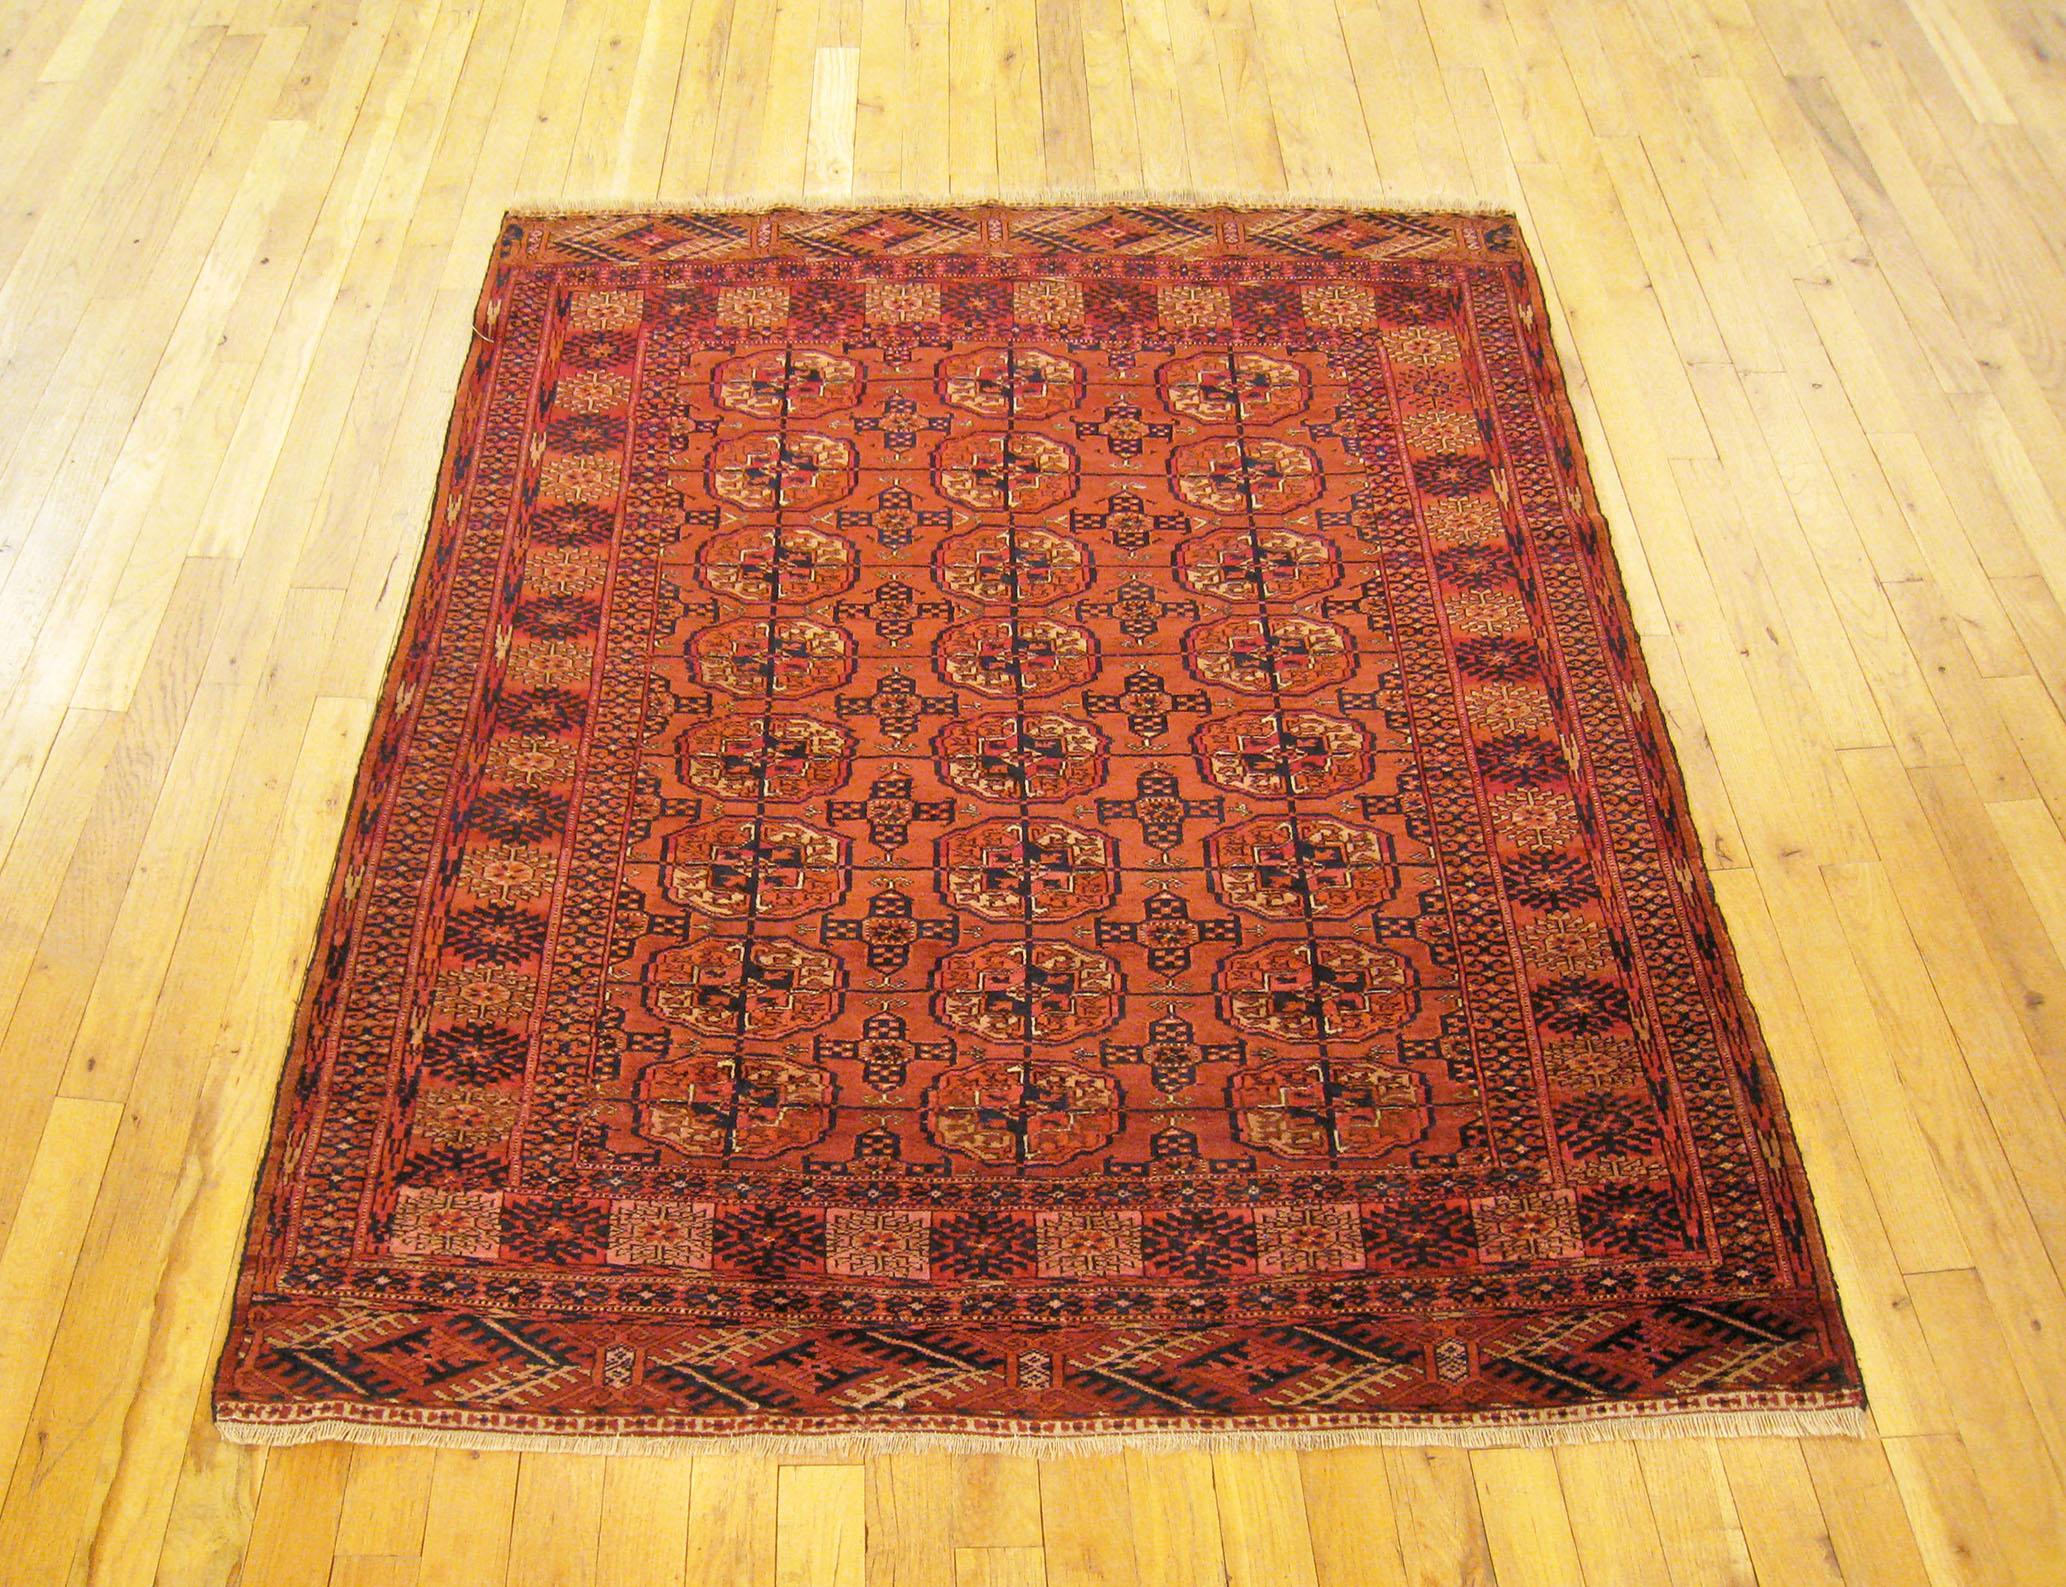 Antique Turkman Bokhara rug, small size

An antique Turkman Bokhara rug, size 4'7